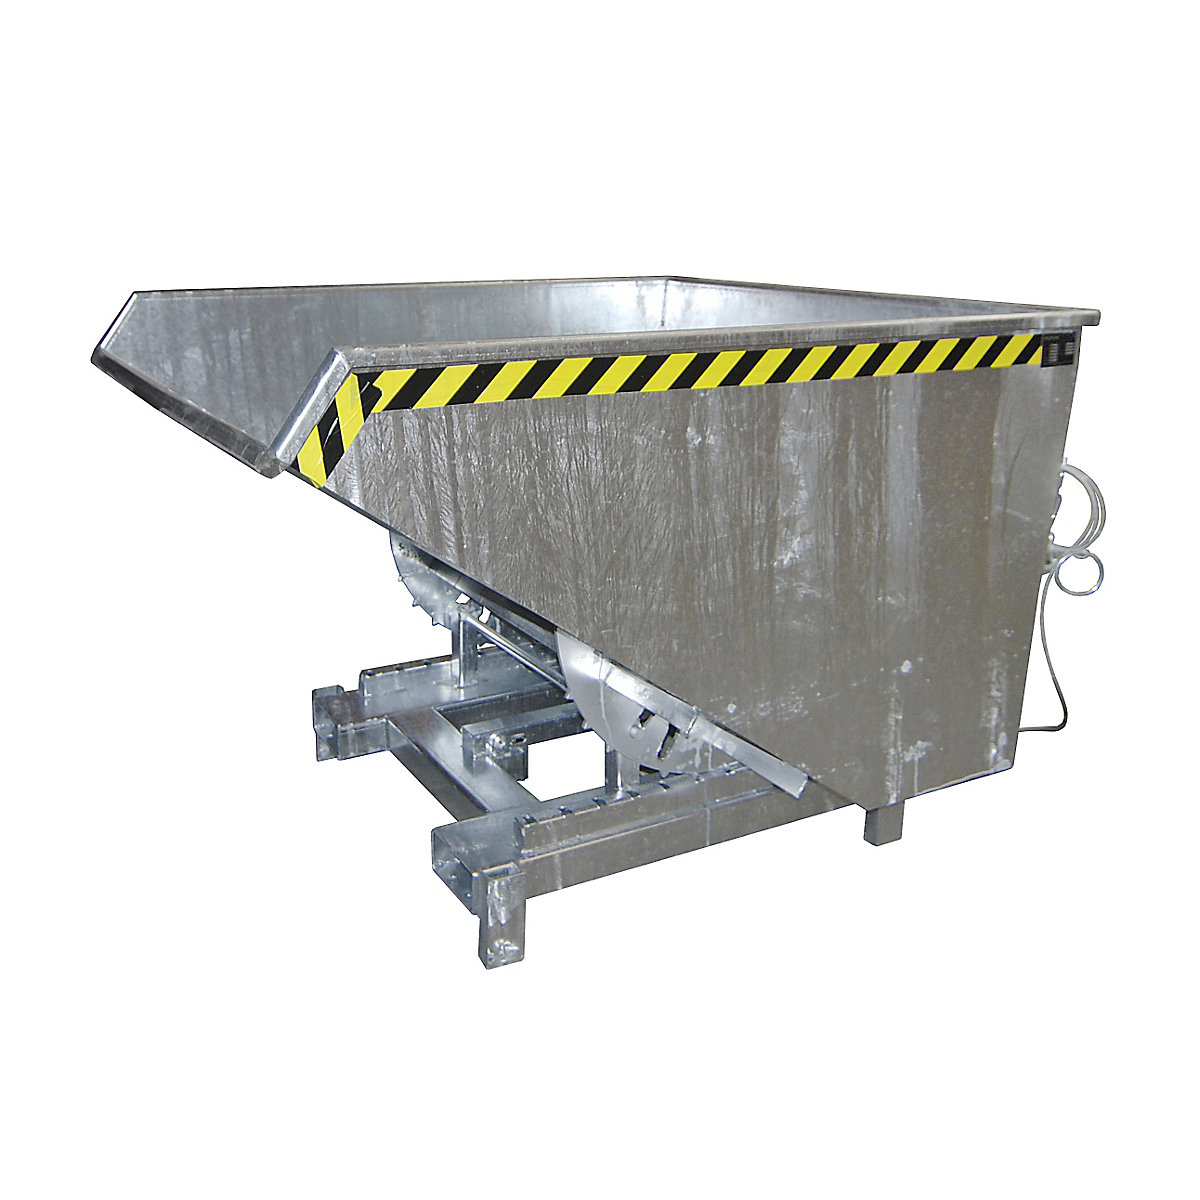 Heavy duty tilting skip – eurokraft pro, capacity 0.9 m³, max. load 4000 kg, hot dip galvanised in accordance with EN ISO 1461-8